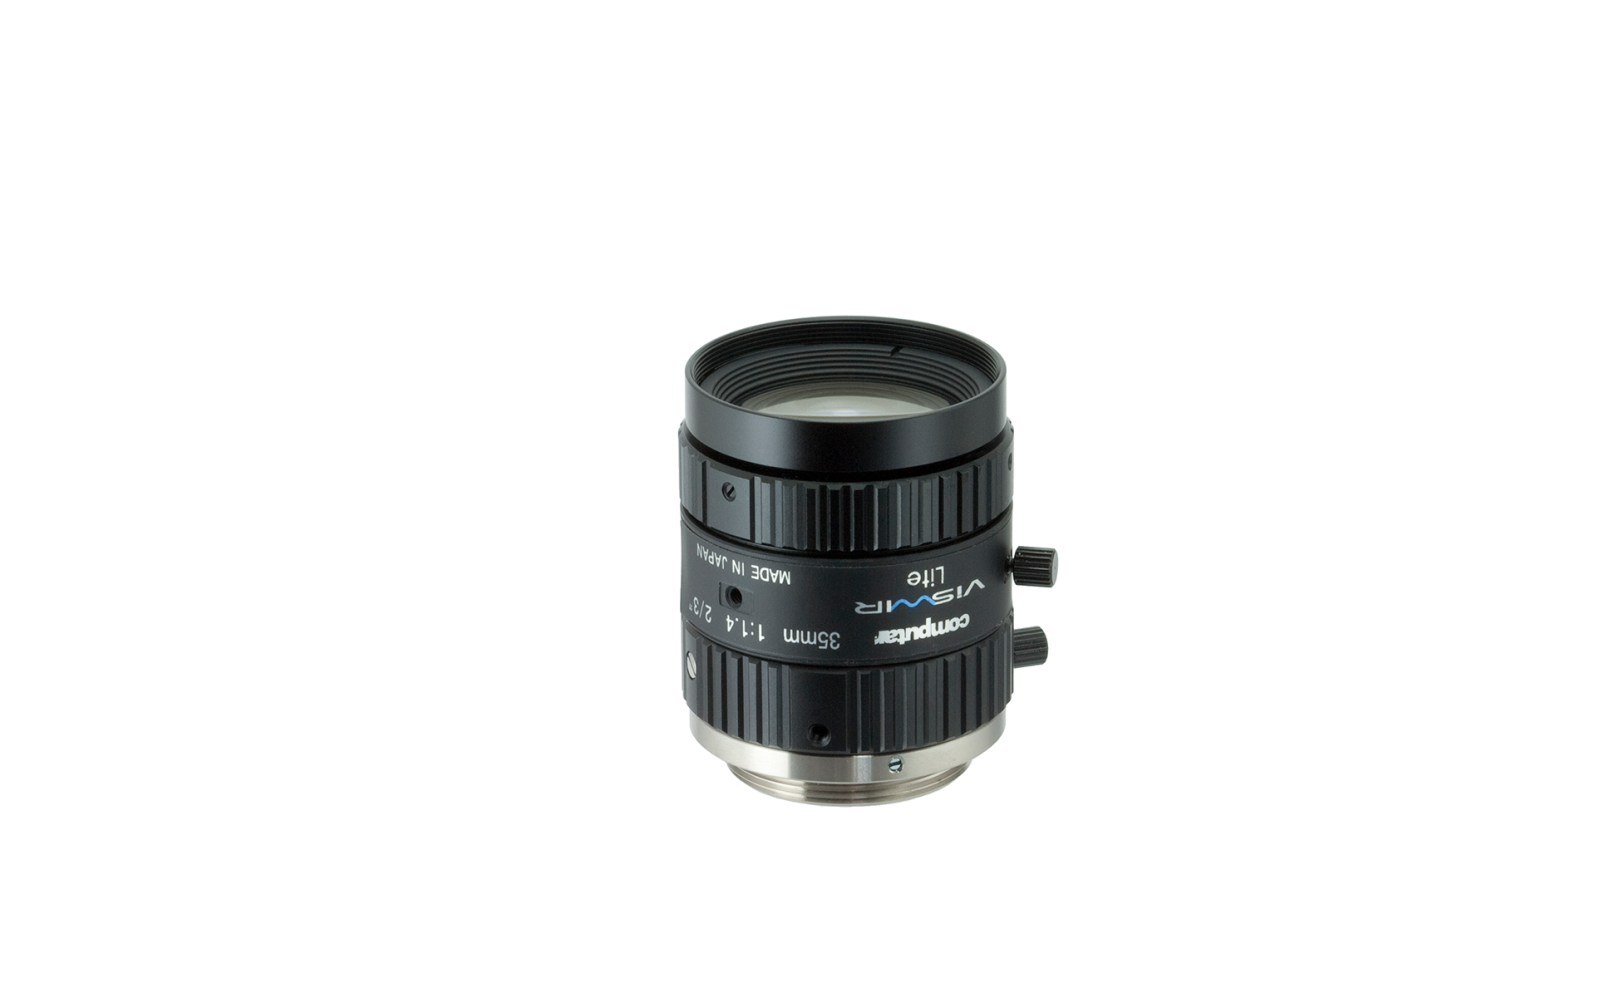 Ống kính - Lens camera Computar M3514-VSW